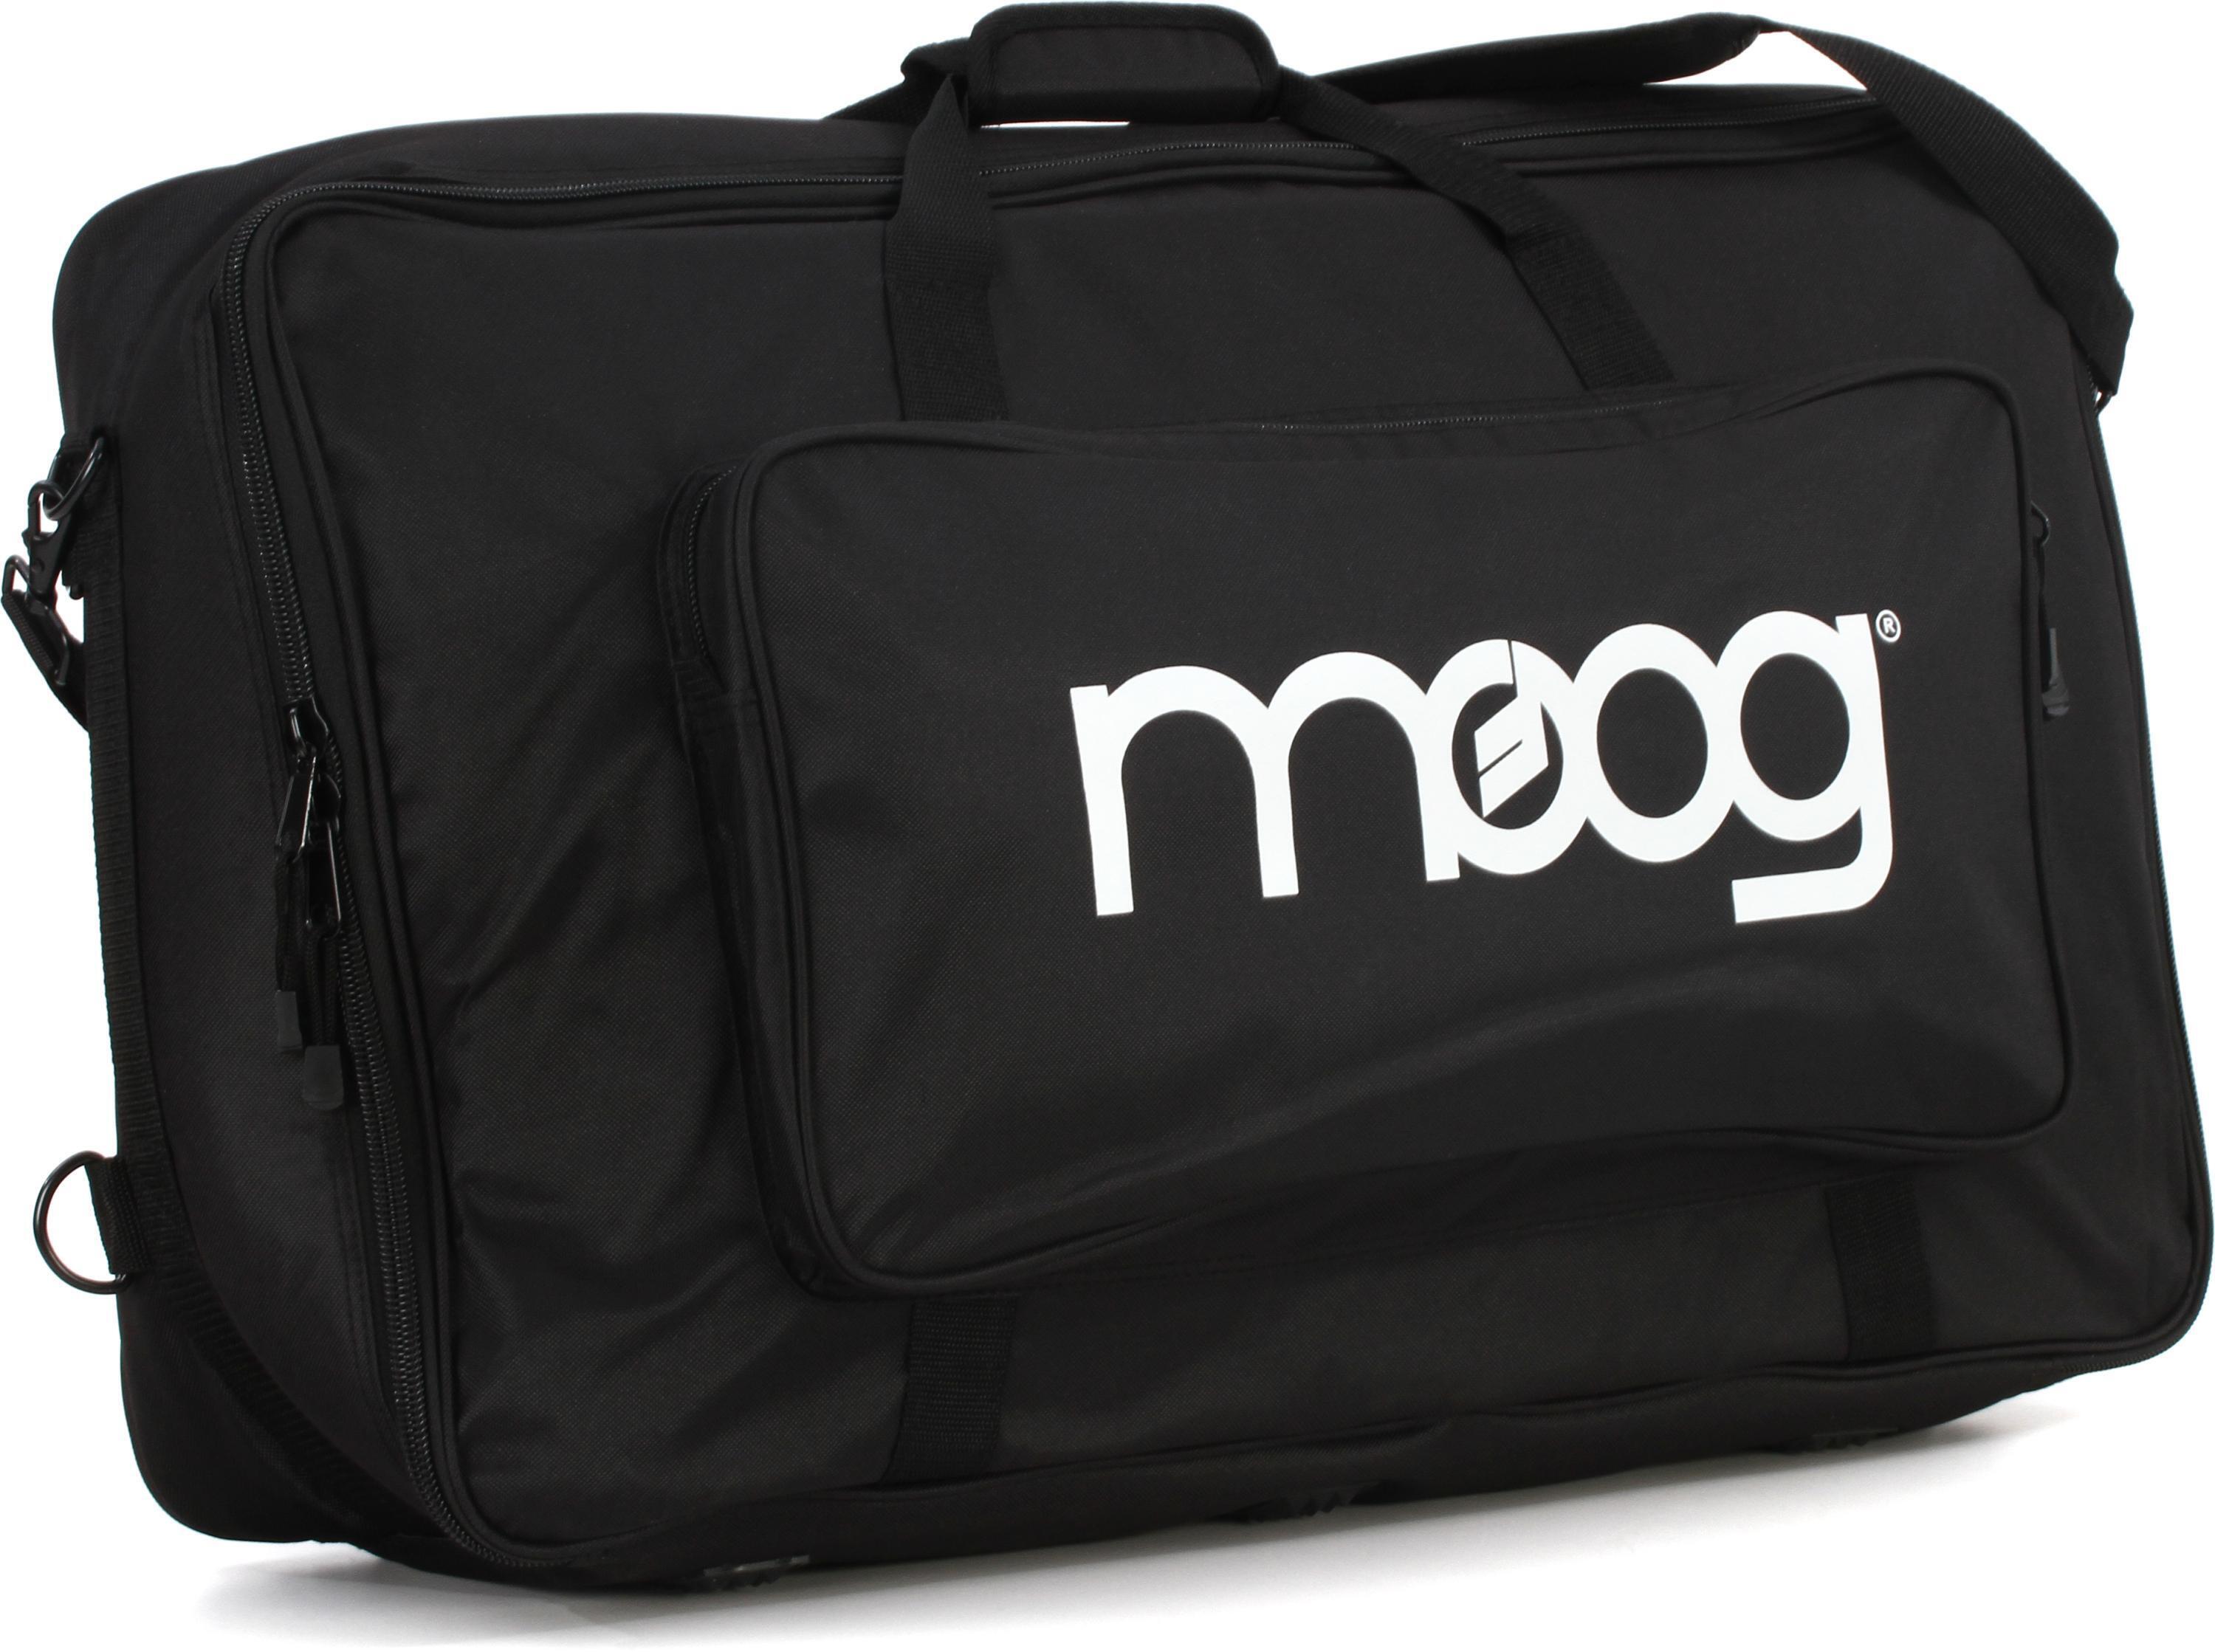 Moog Gig Bag for Little Phatty or Sub 37 TE | Sweetwater